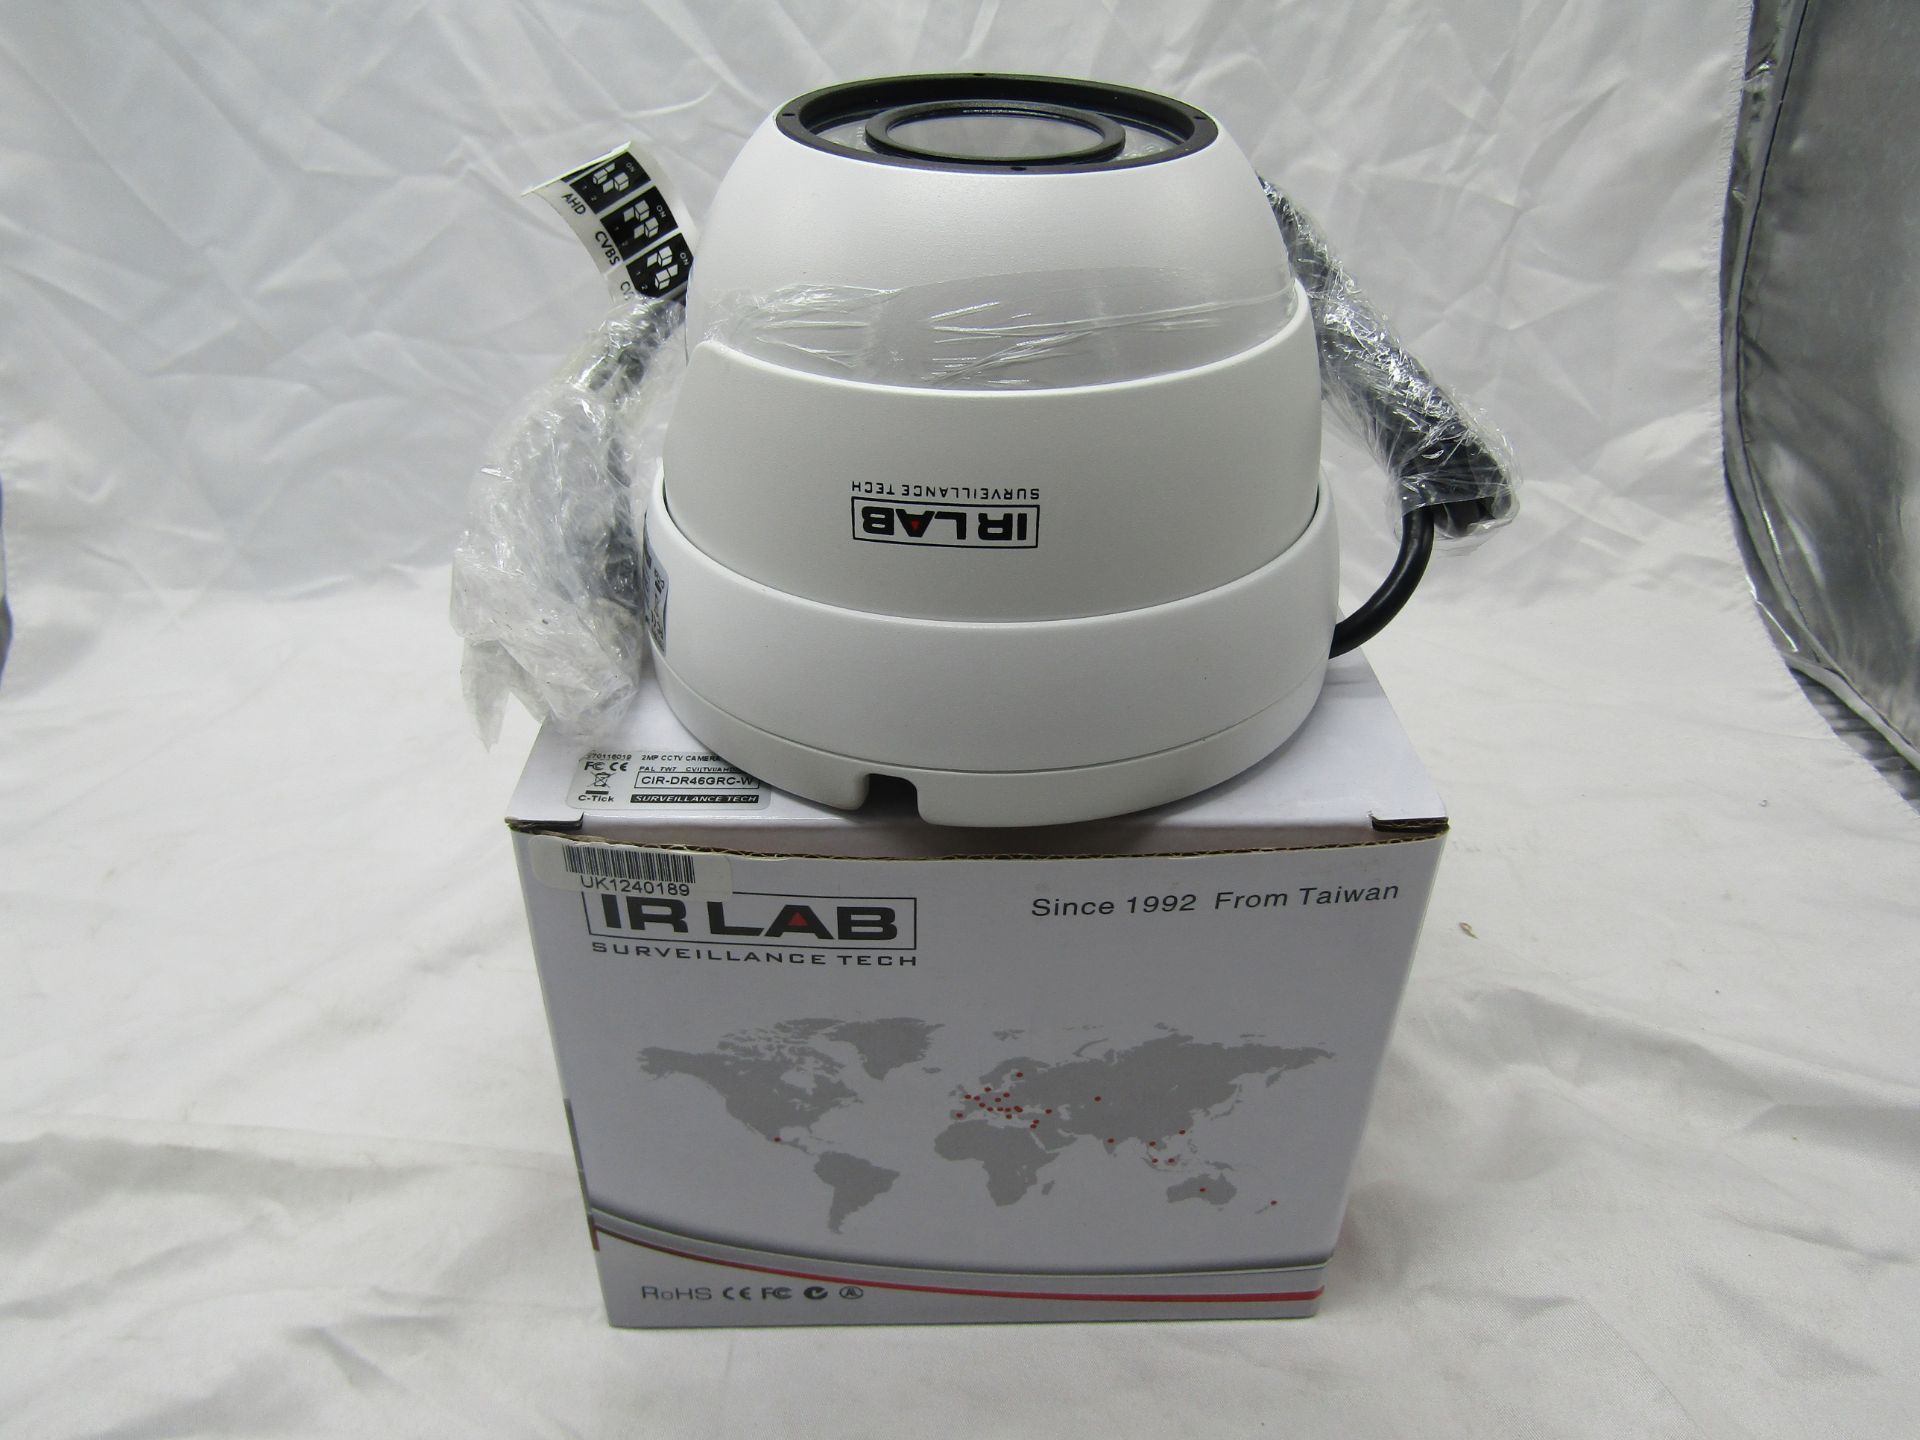 IR LAB 2mp CCTV Camera DC12V. Model: CIR-DR46GRC-W - Untested